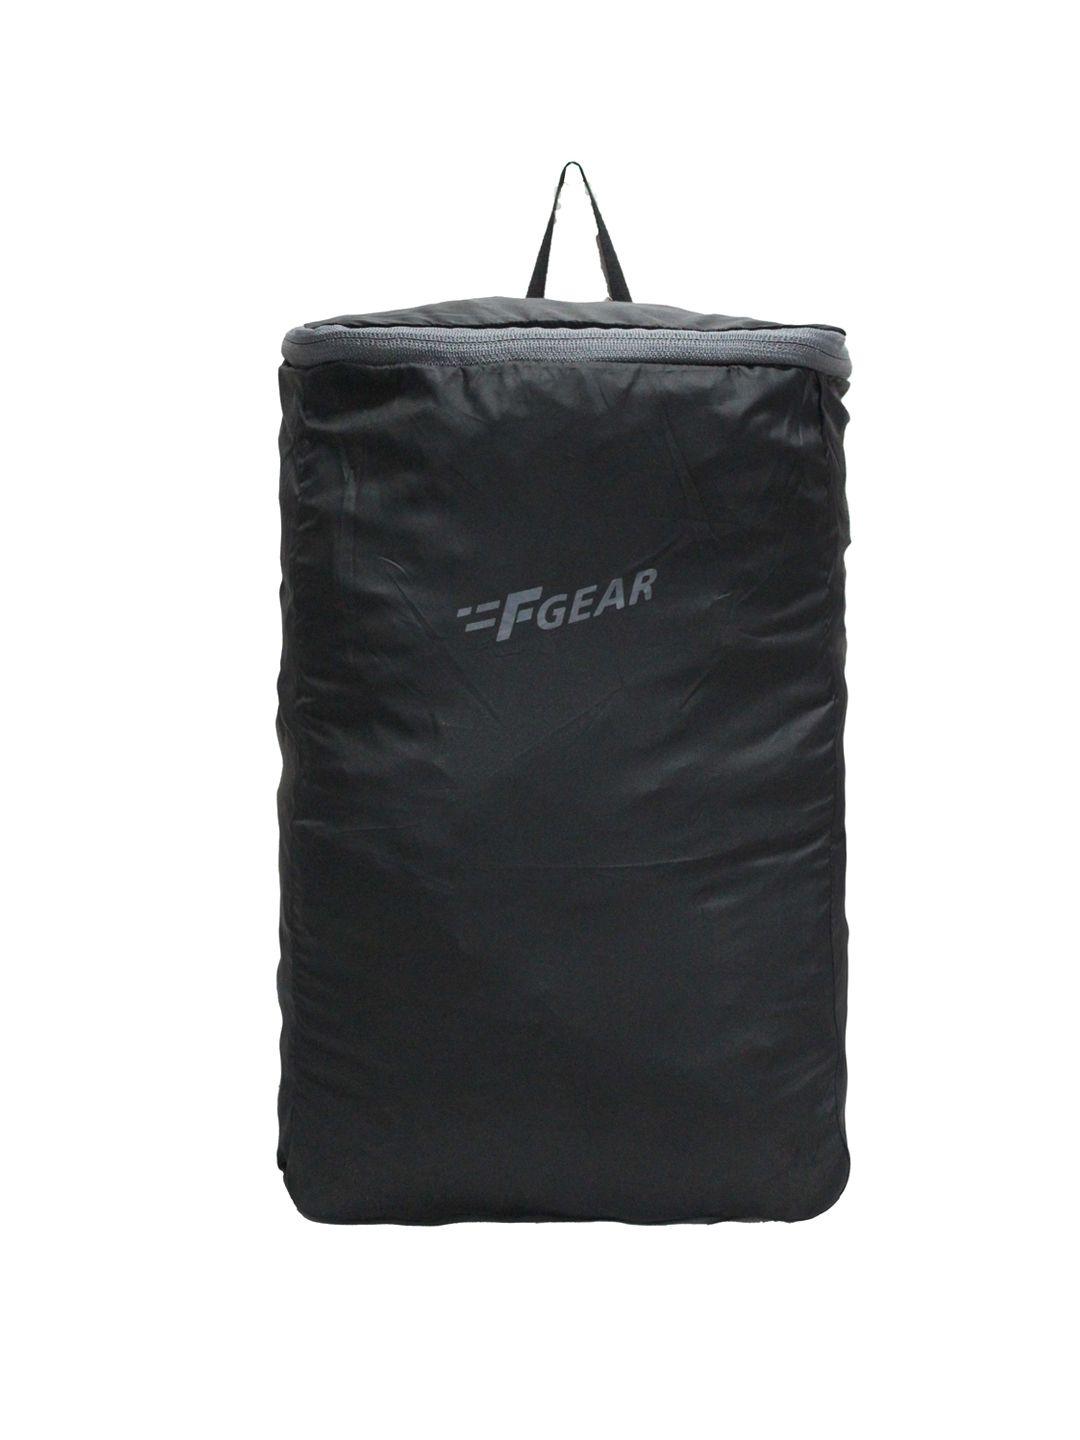 f gear black solid travel storage shoes bag